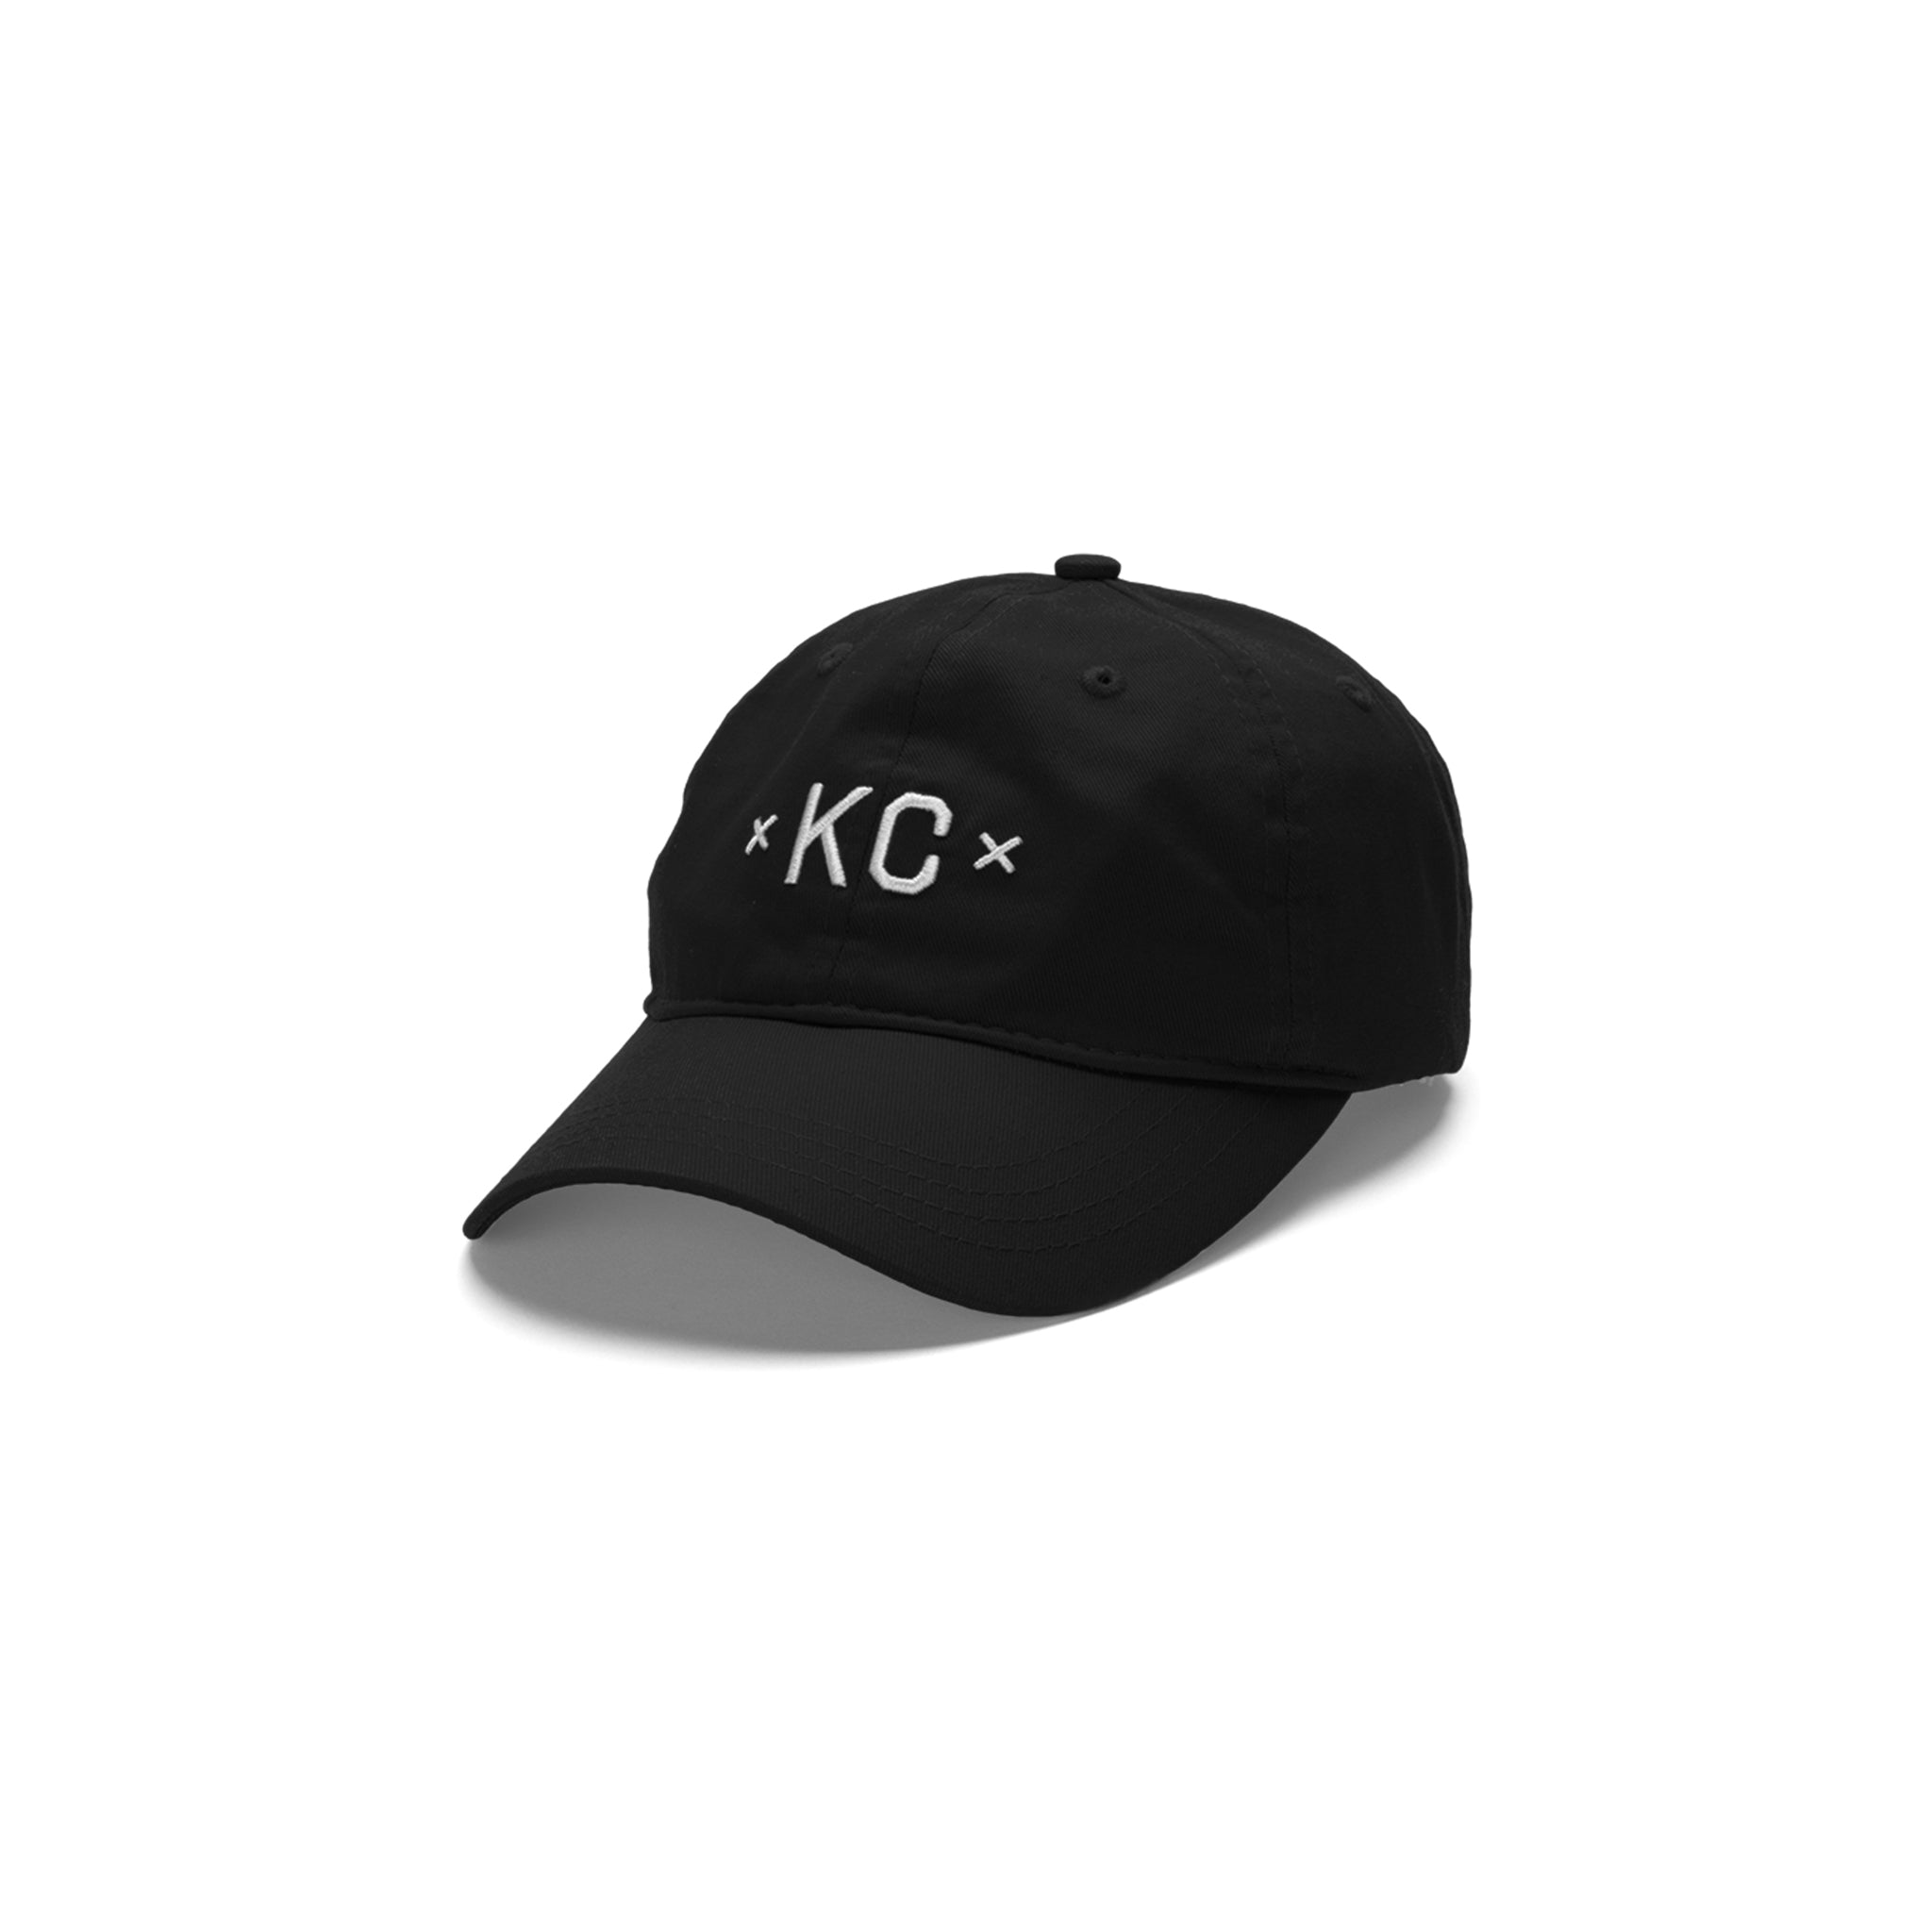 Signature KC Dad Hat - Black